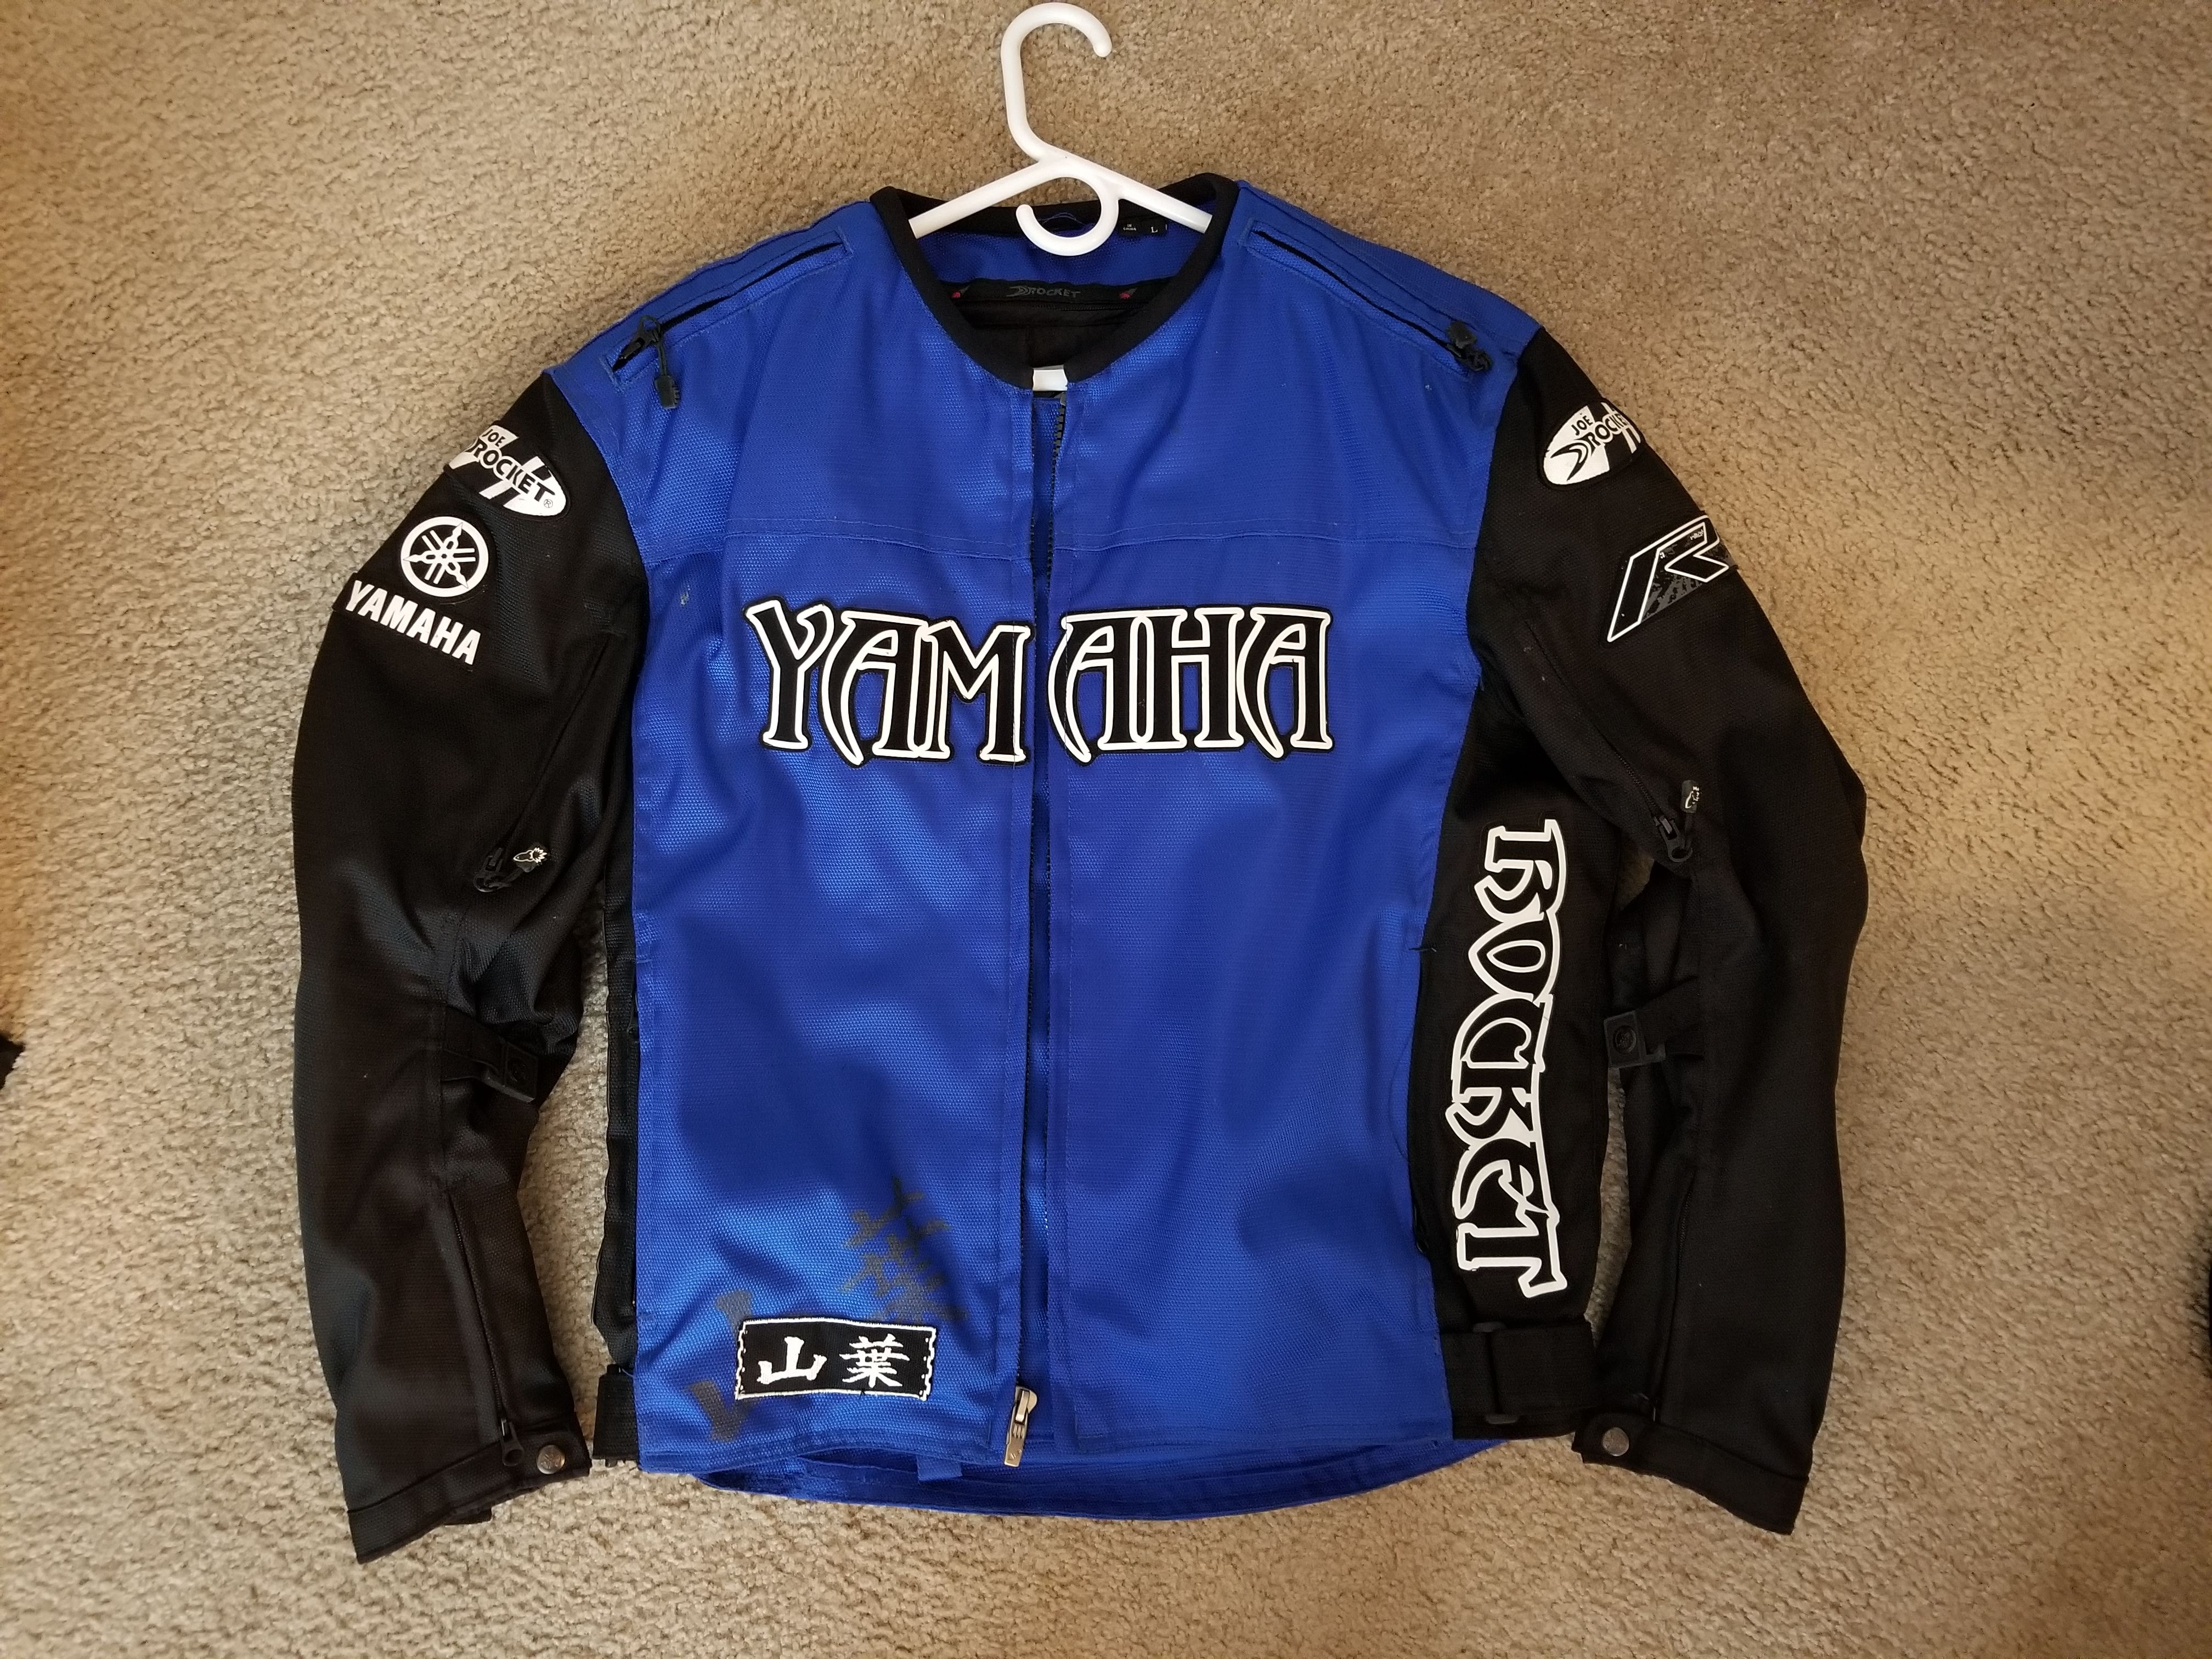 Joe Rocket Yamaha Motorcycle Jacket